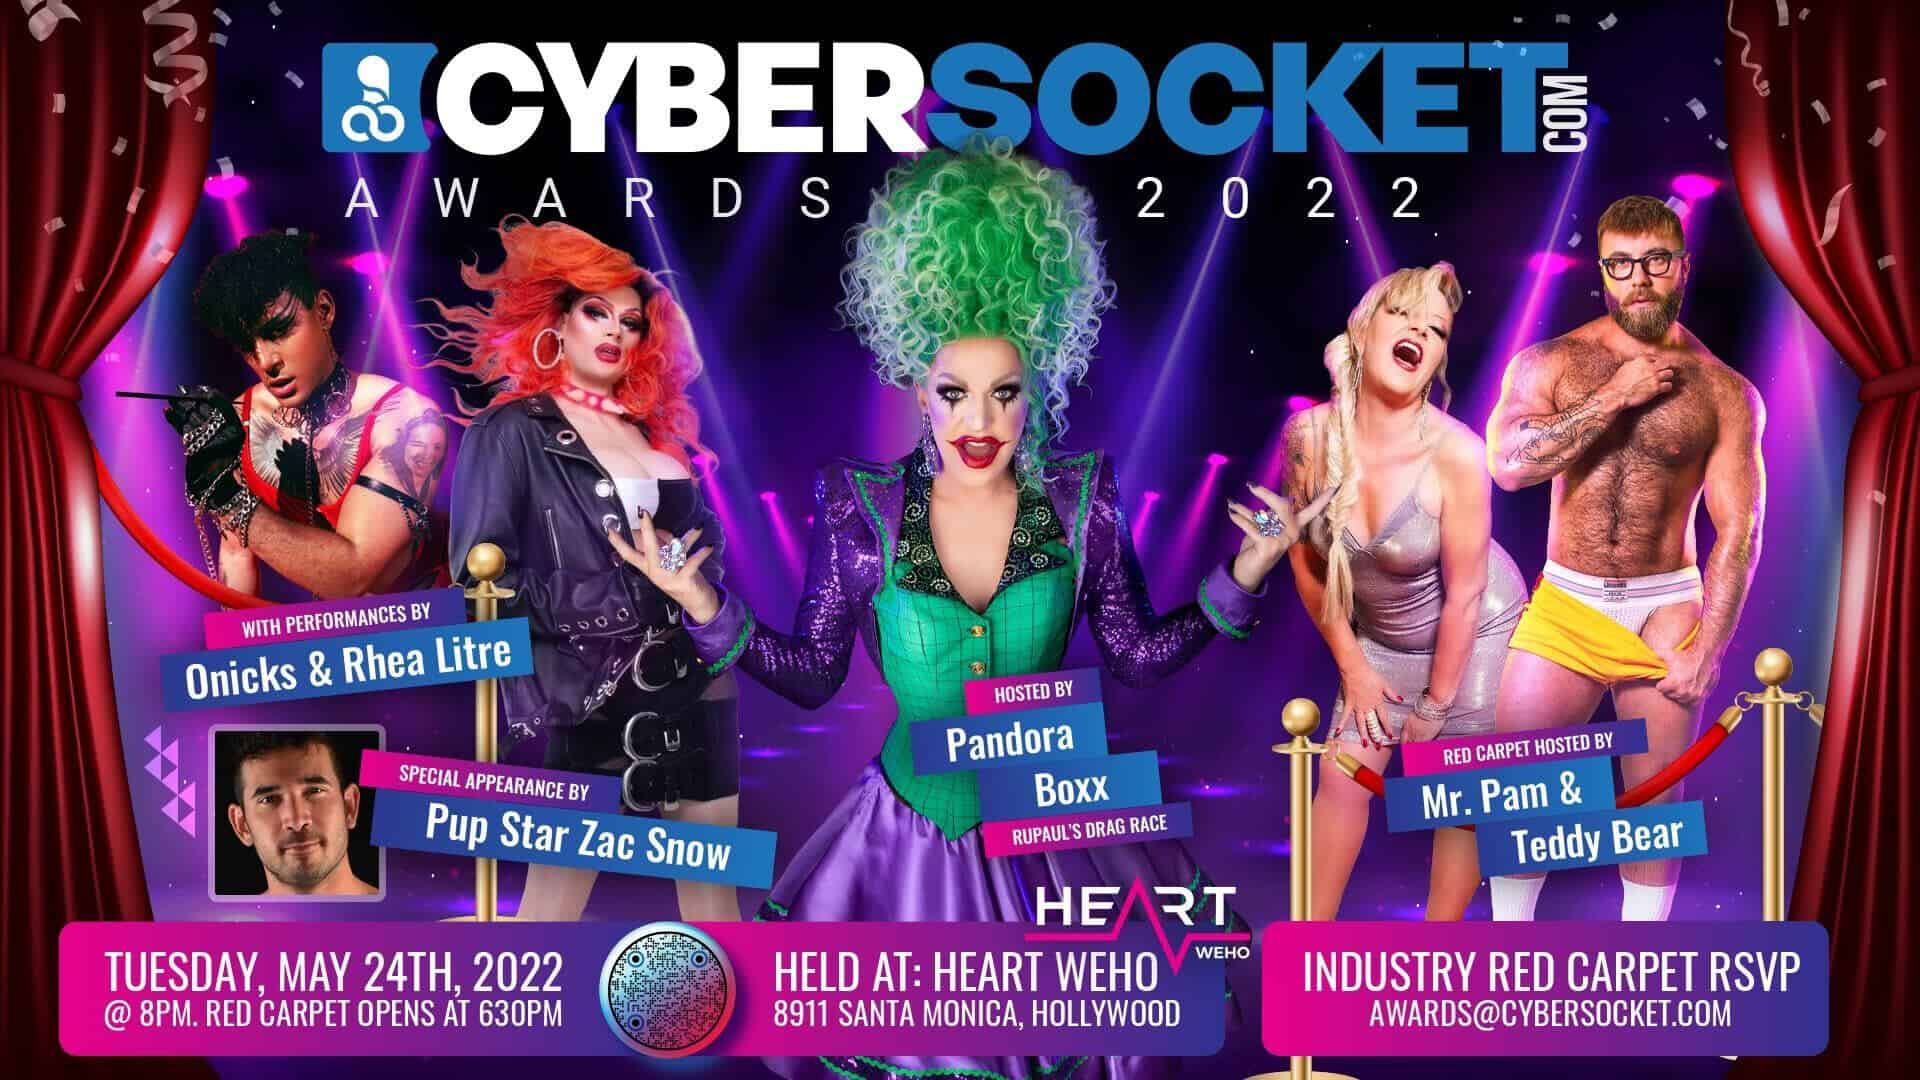 2022 Cybersocket Awards Are Super-sizing Your Holiday Celebration